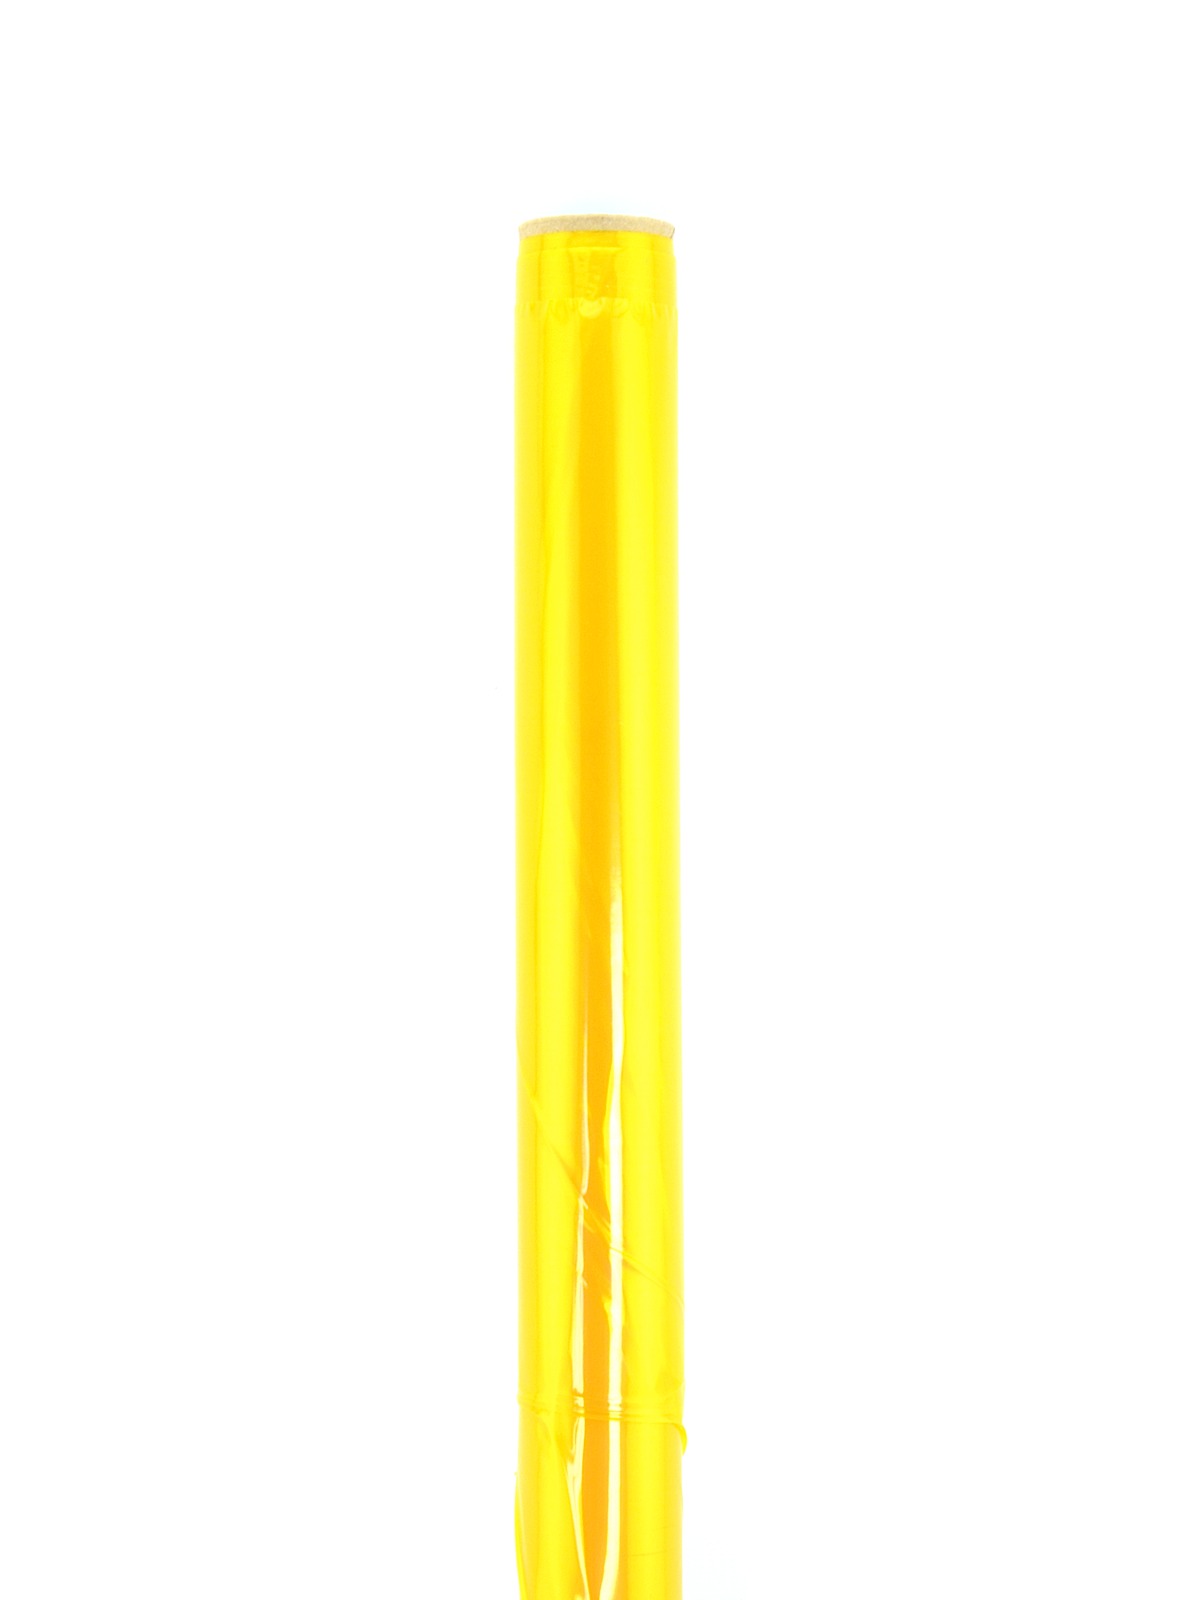 Cellophane Rolls Yellow